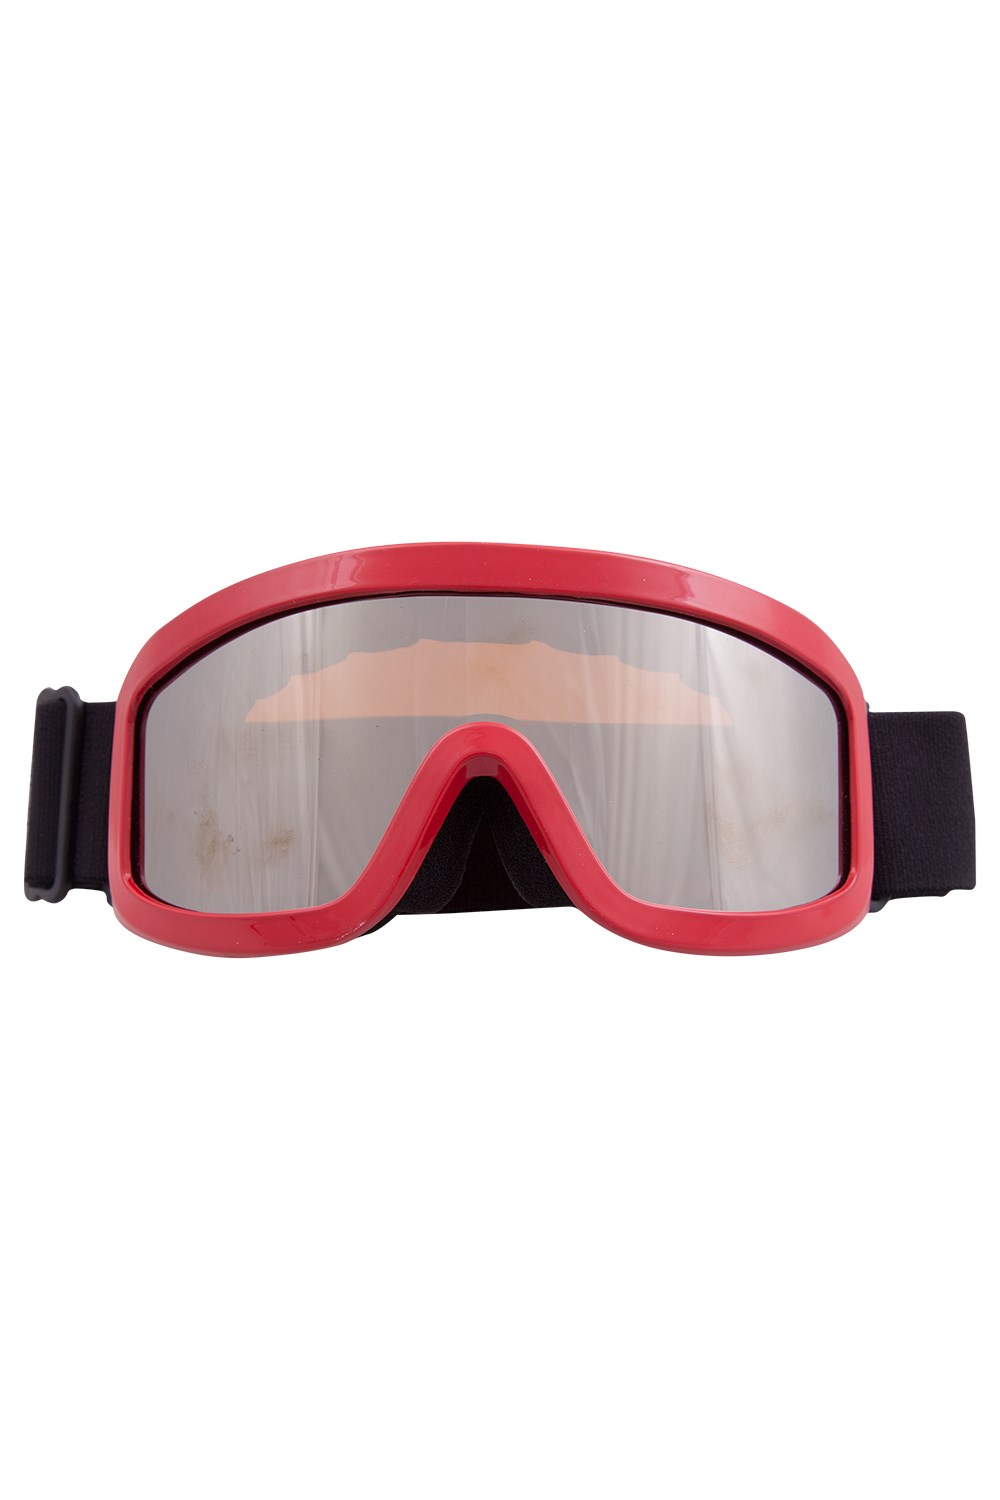 Mountain Warehouse Men's Ski Goggle II UV400 Anti-Fog Lens 